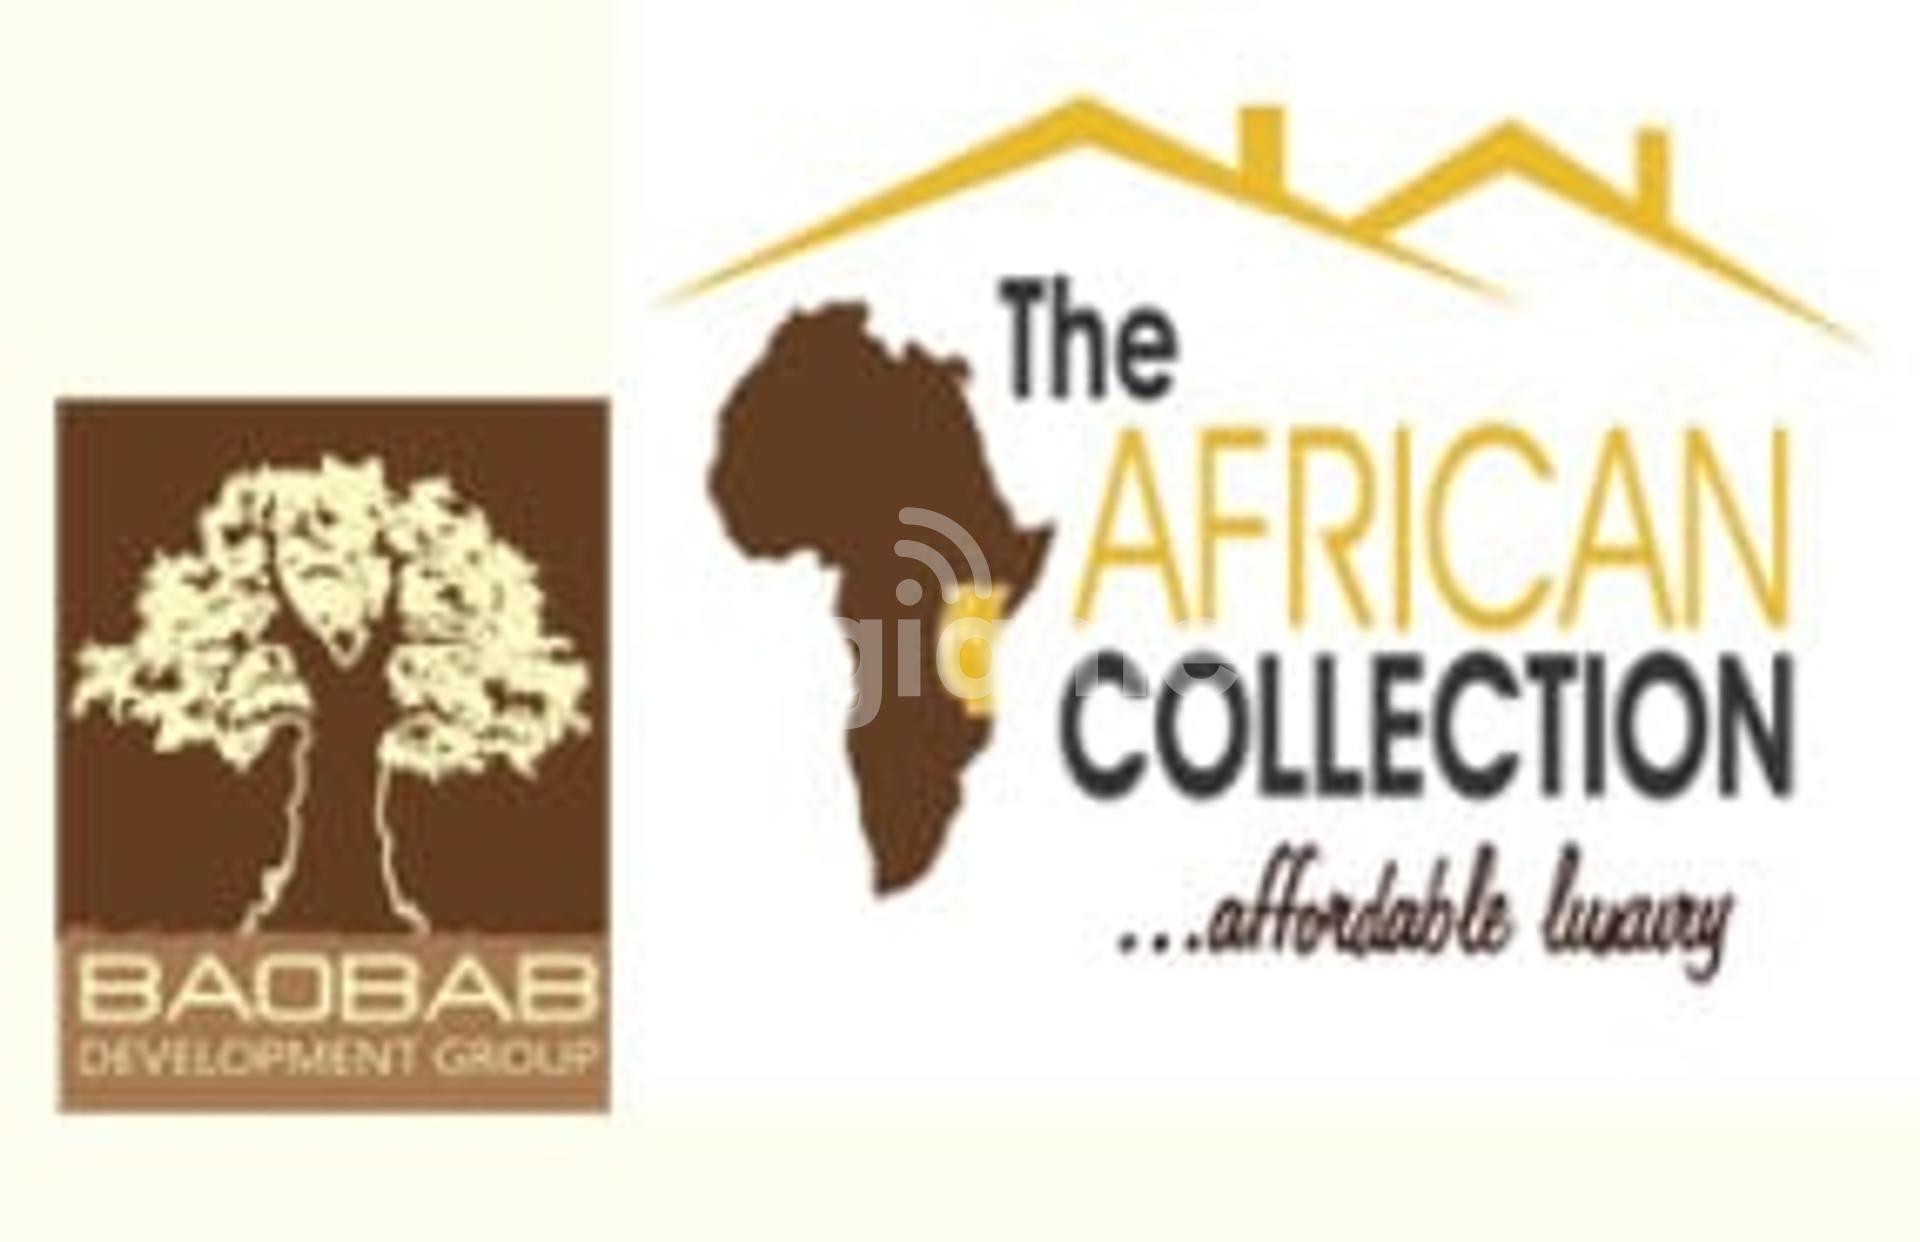 Baobab Development Group Ltd